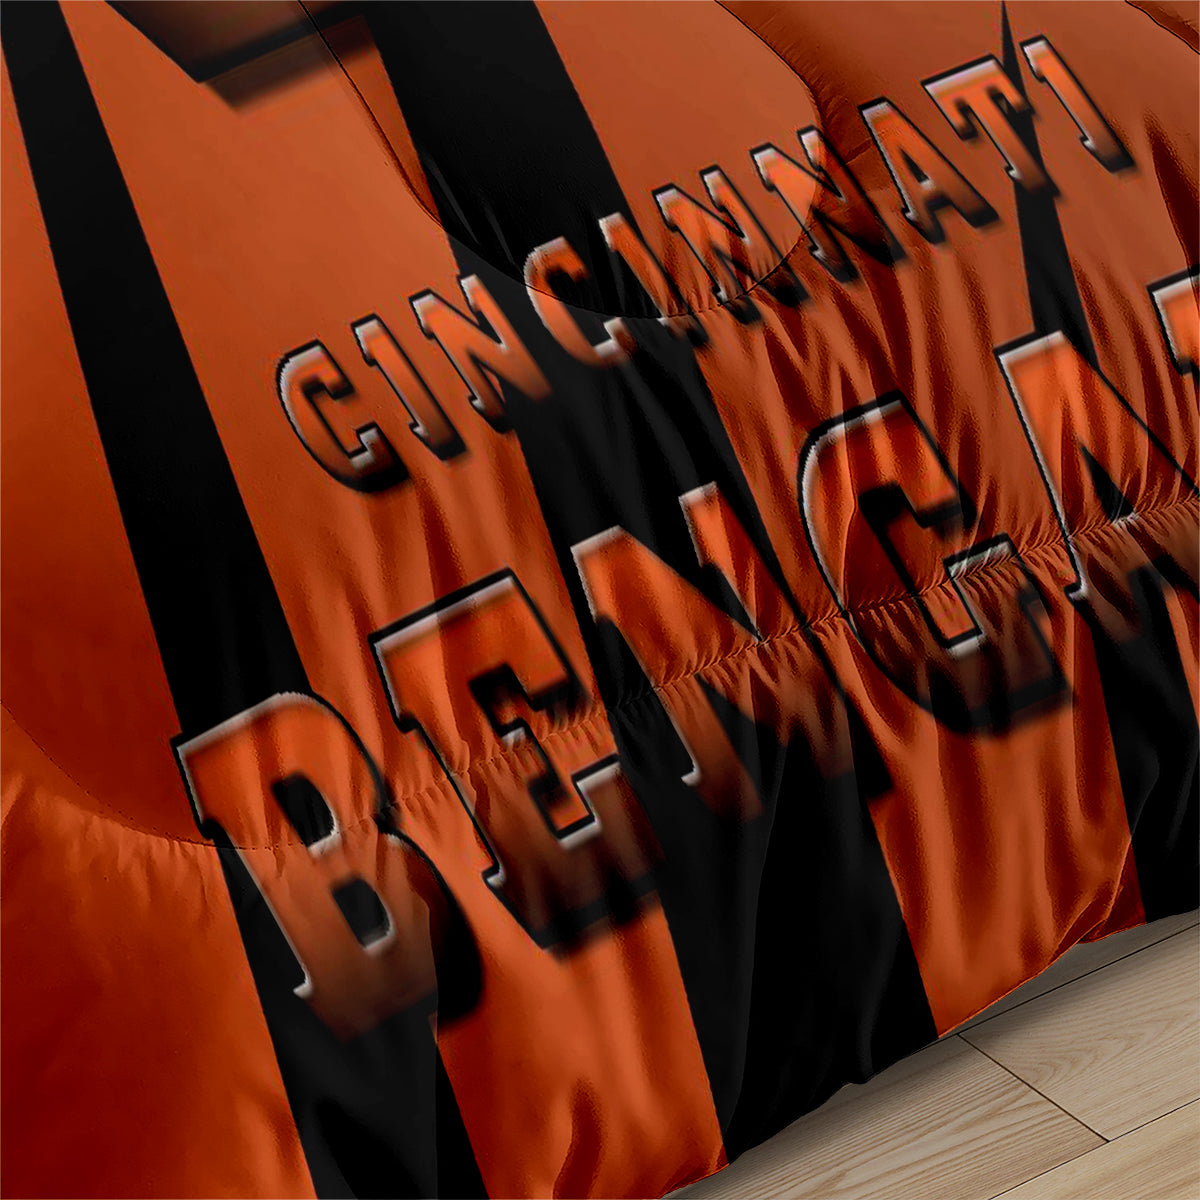 Cincinnati Bengals Football Team Comforter Pillowcase Sets Blanket All Season Reversible Quilted Duvet